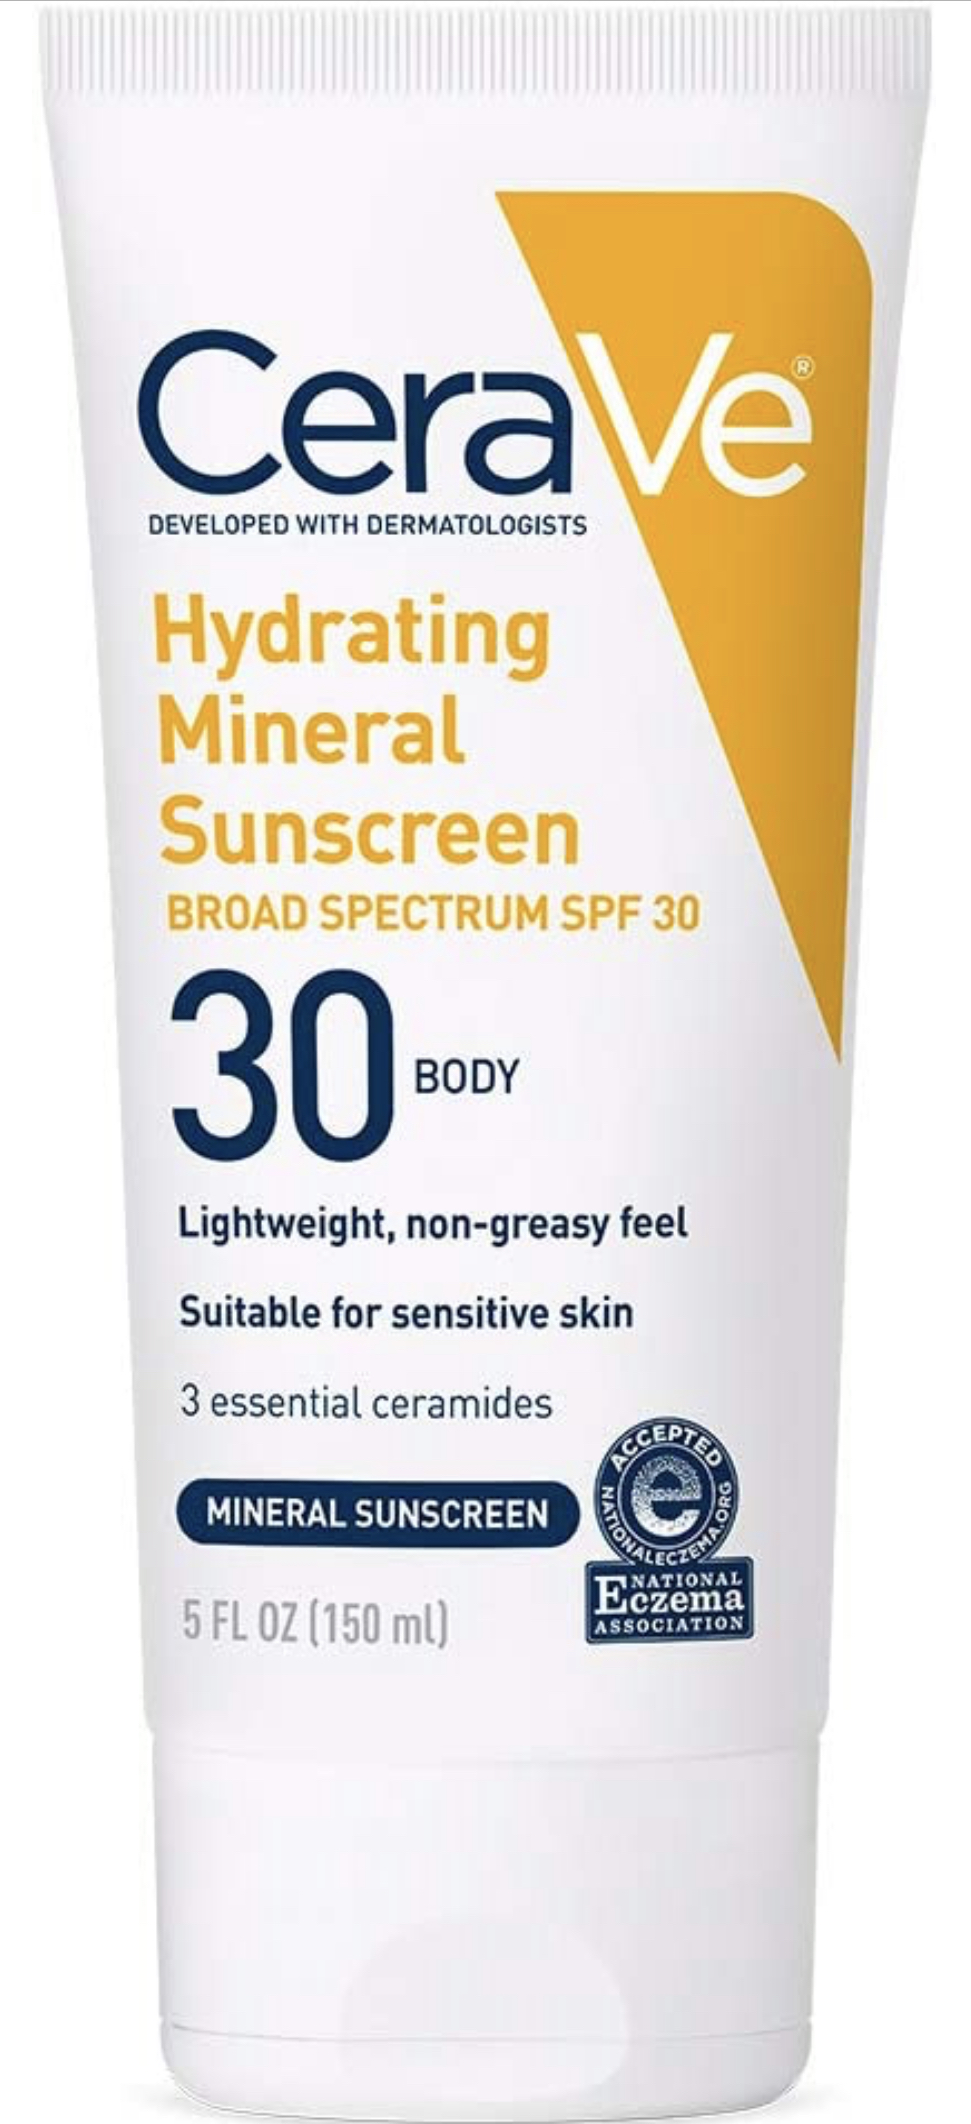 CeraVe Hydrating Mineral Suncreen Bottle for Effective Skin Care